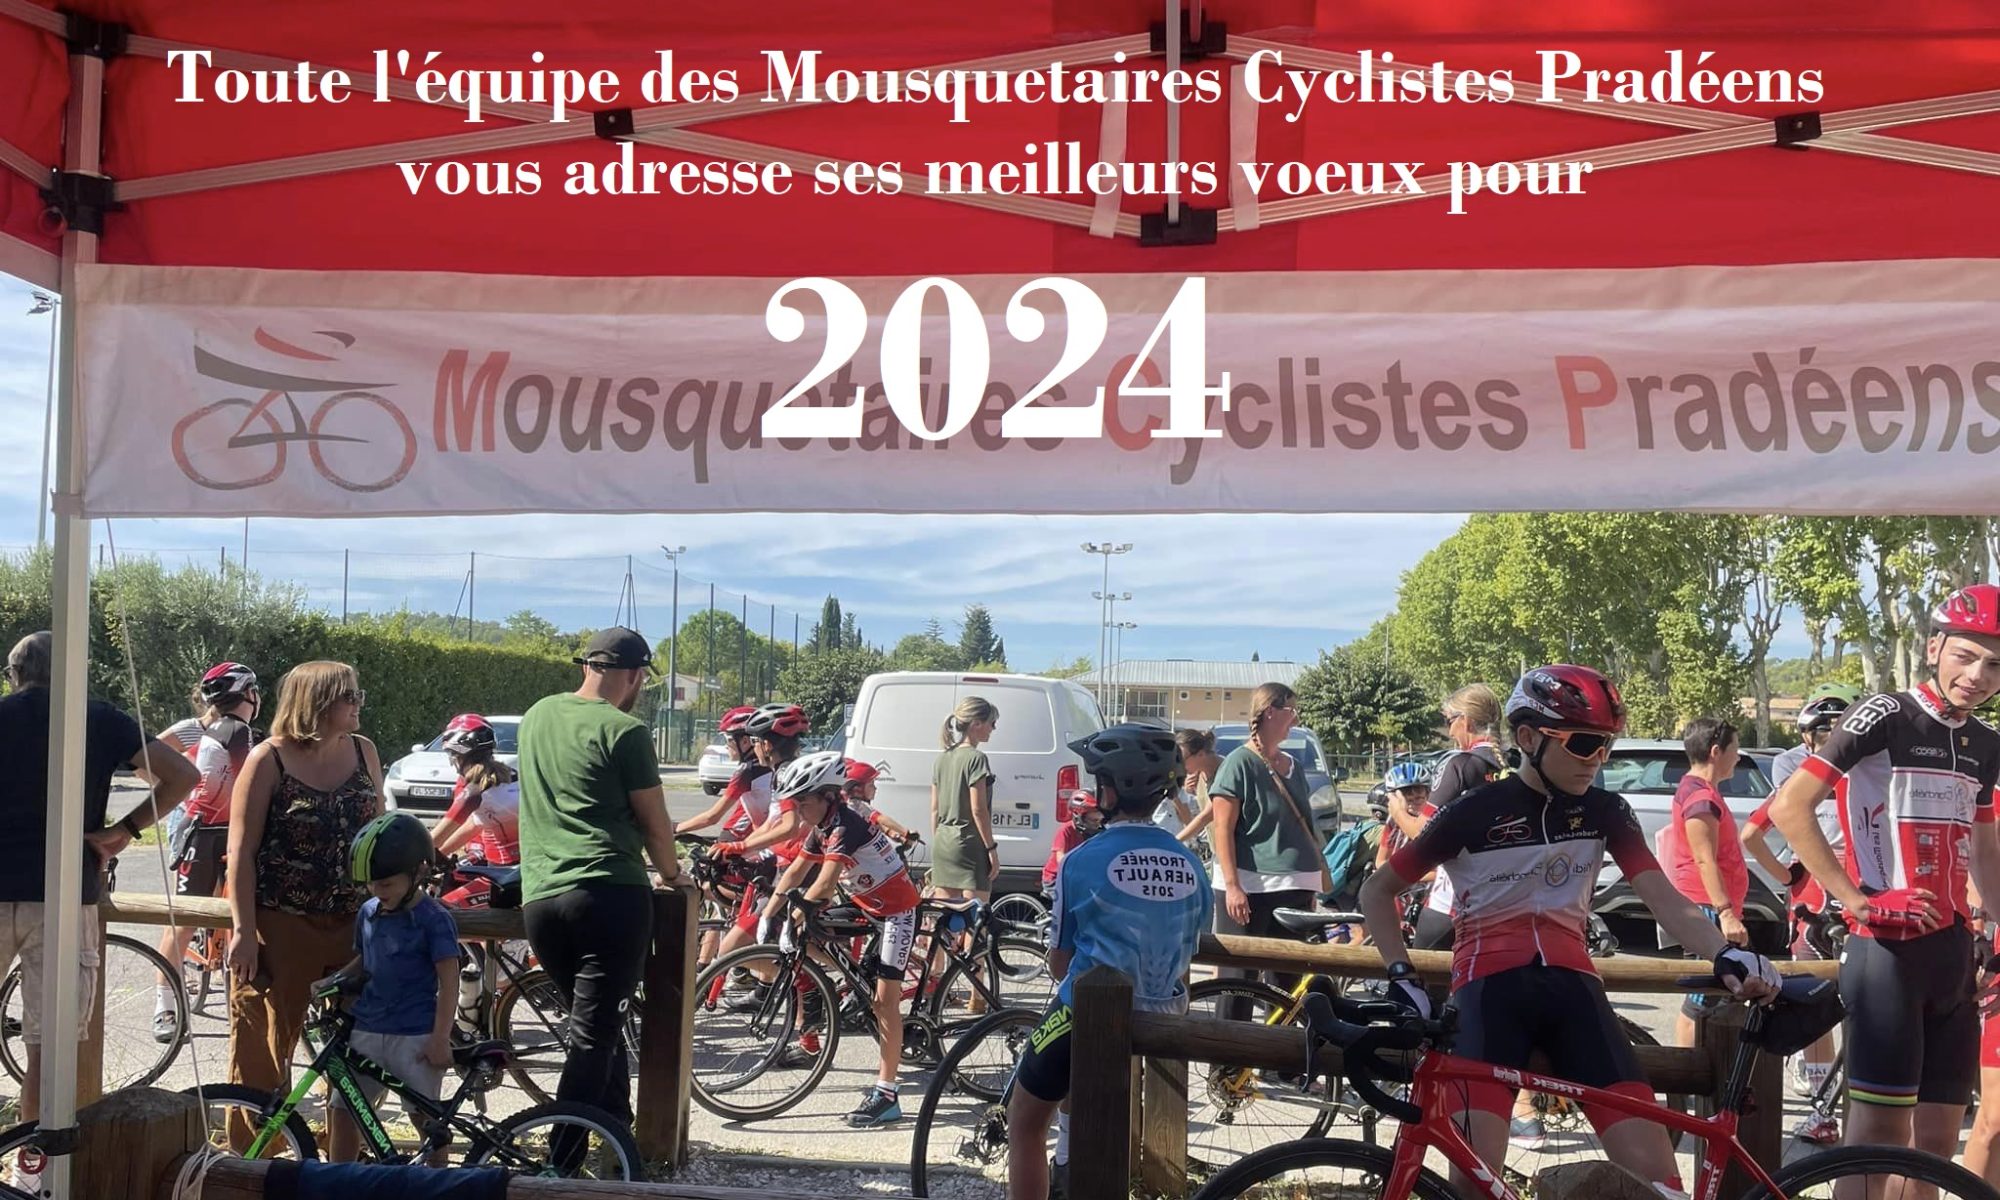 Mousquetaires Cyclistes Pradéens